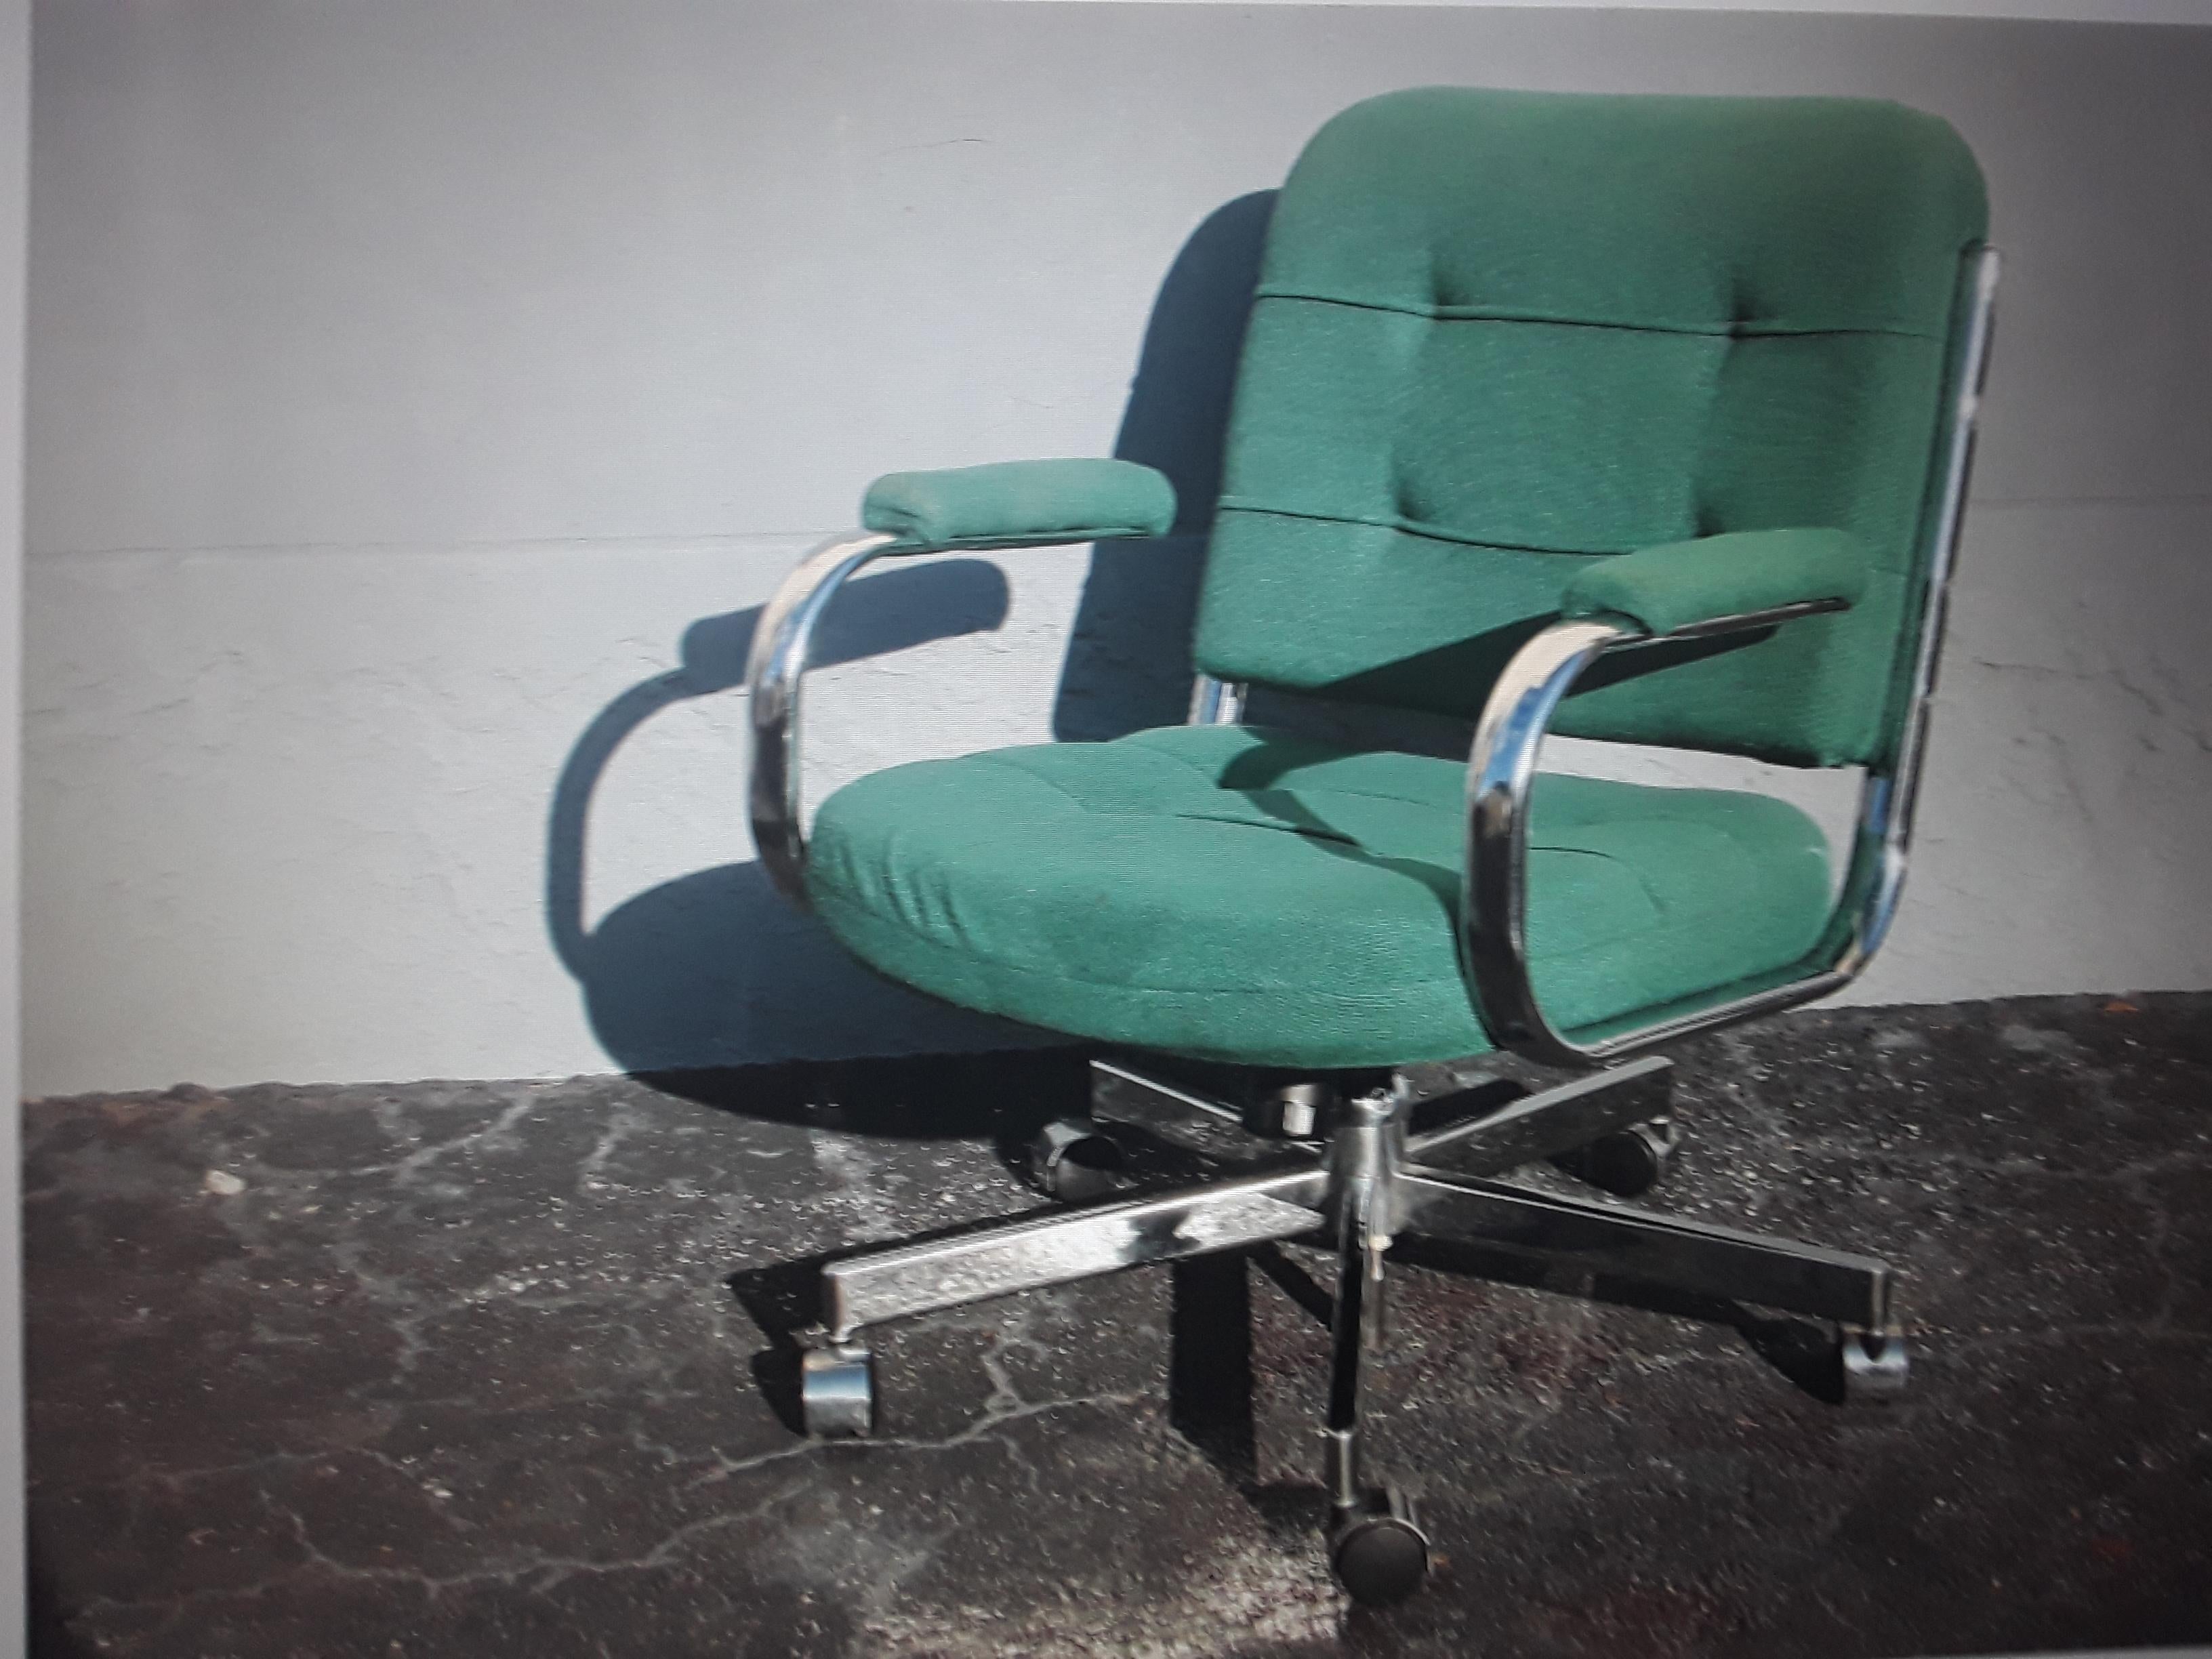 1970's Ultra Modern Adjustable Office Desk Chair. Sehr gute Qualität. Grüne Farbe.